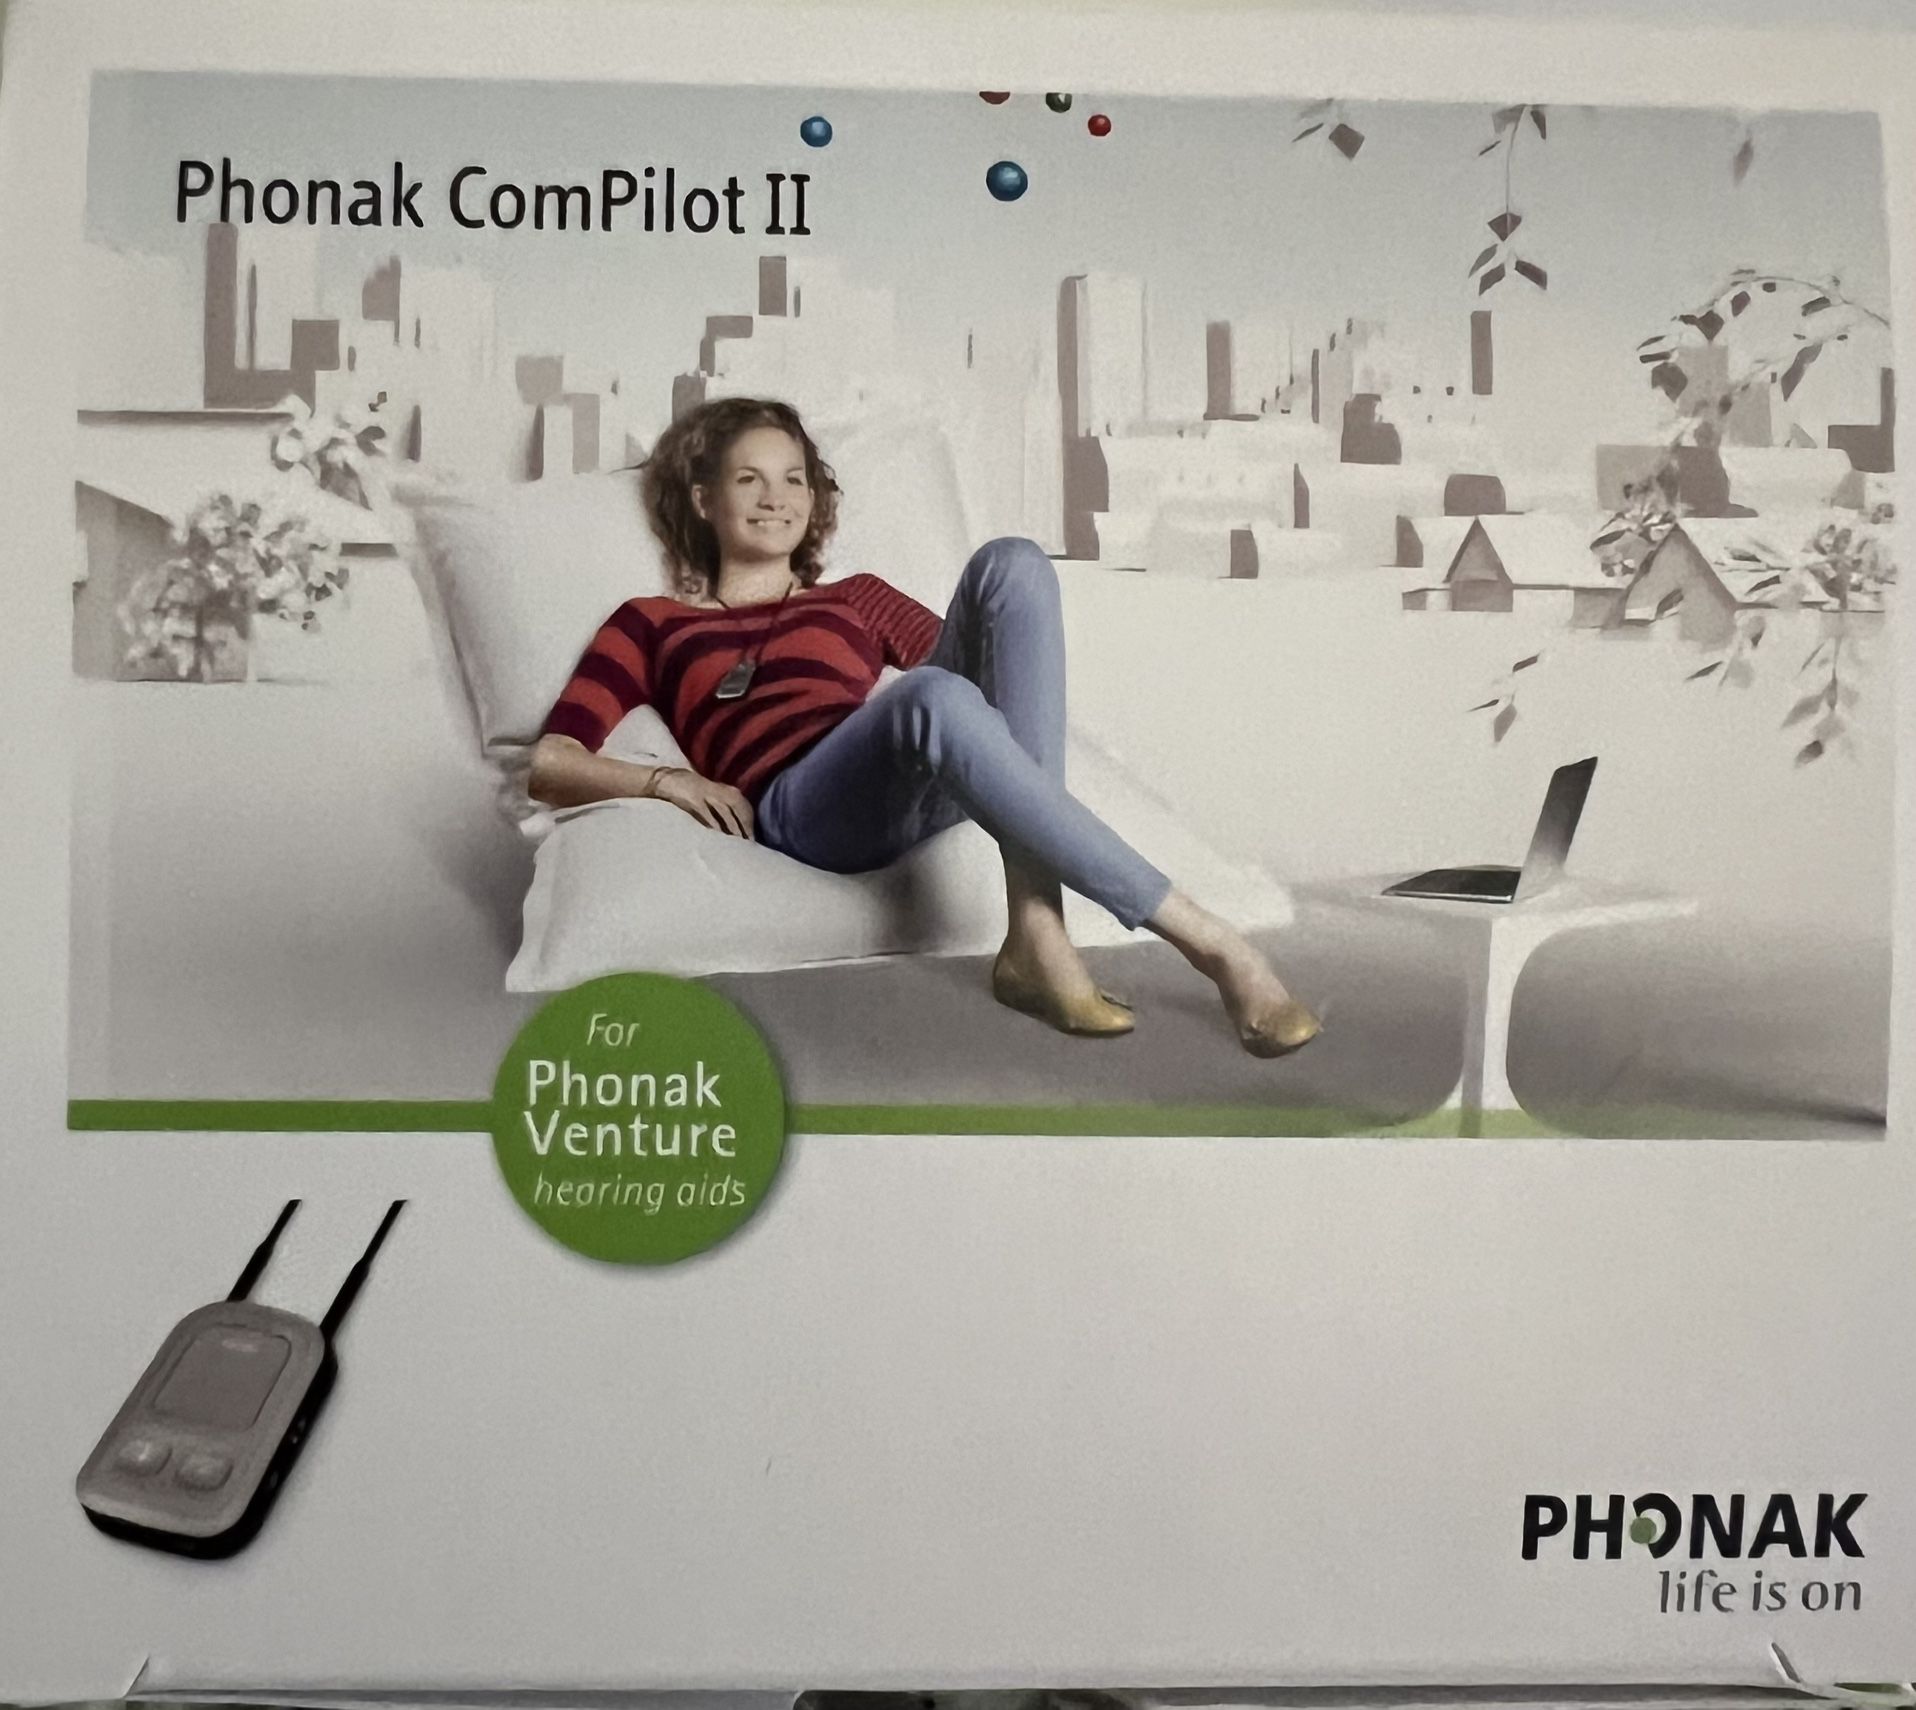 Phonak ComPliot II